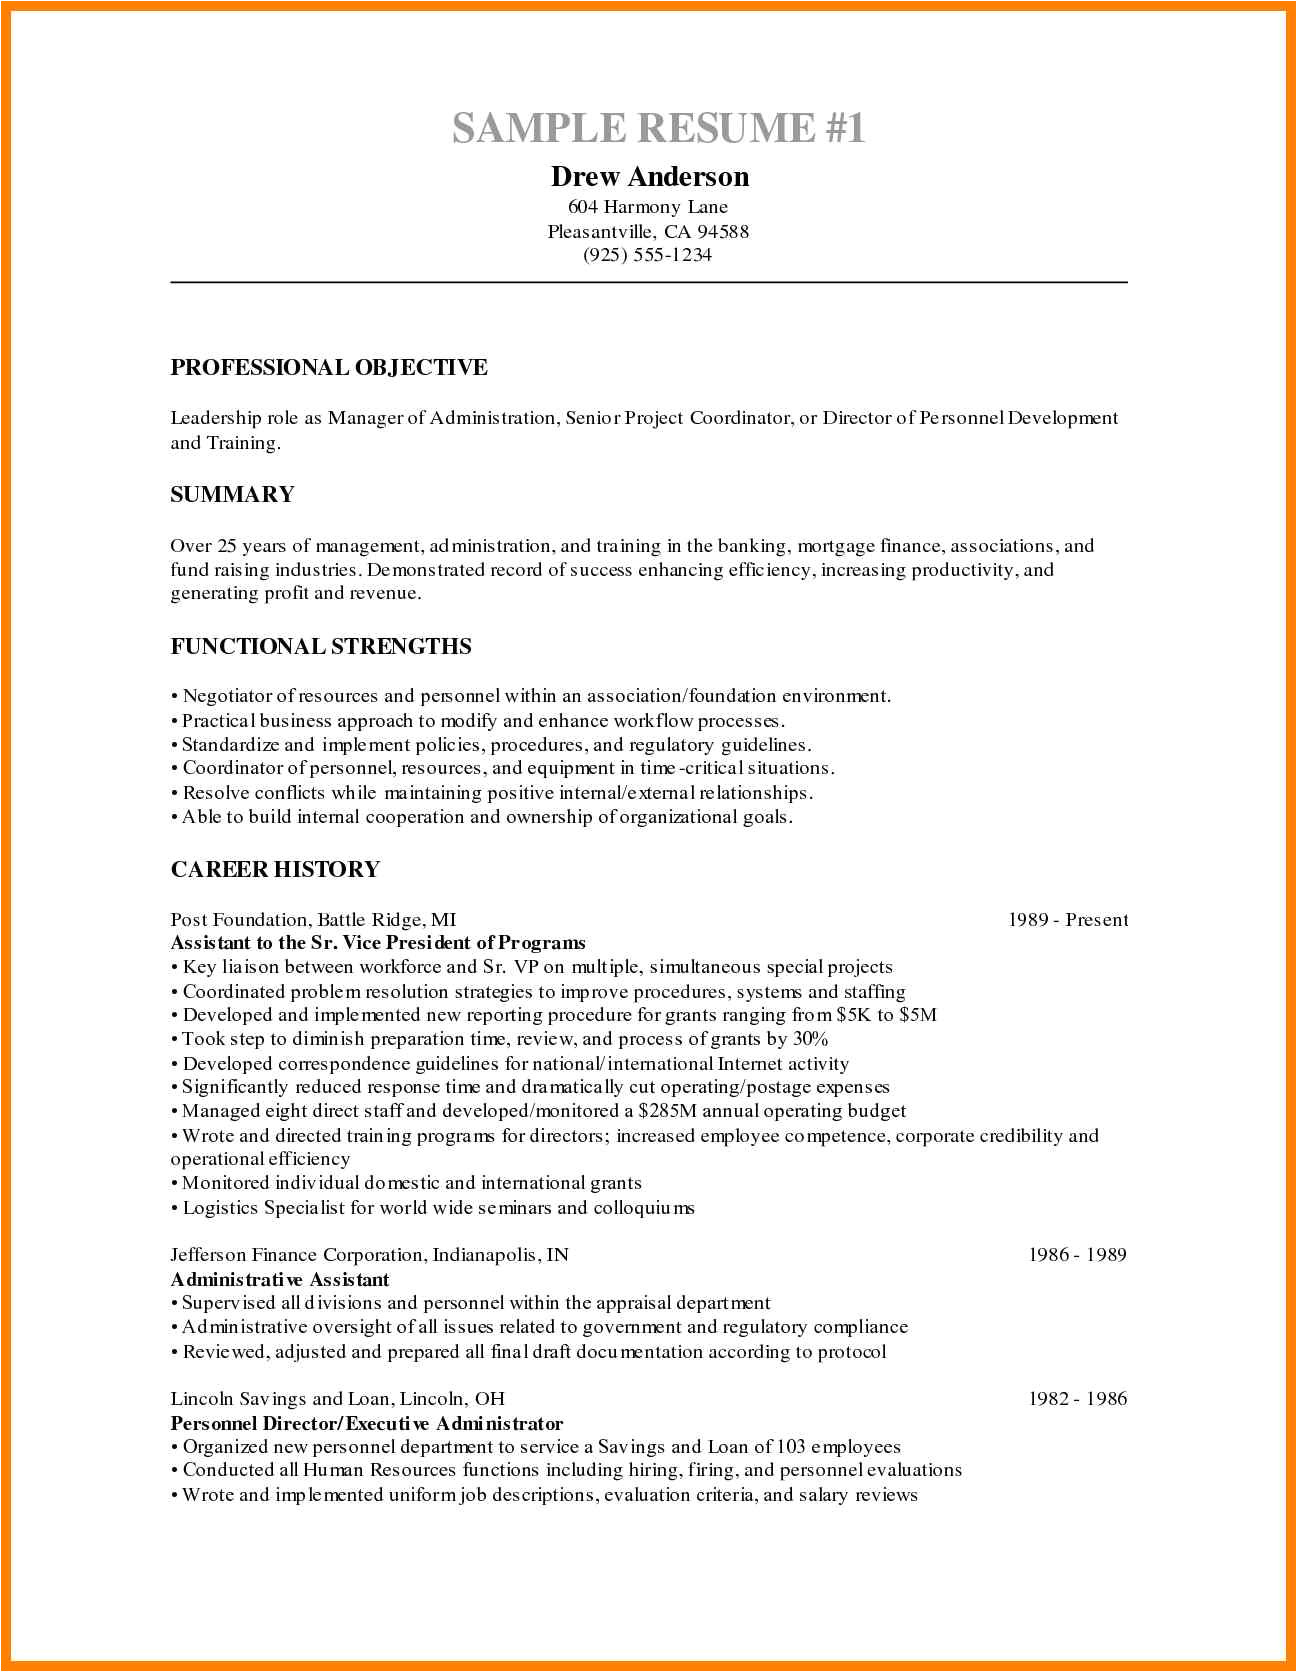 sample-resume-for-a-call-center-agent-williamson-ga-us